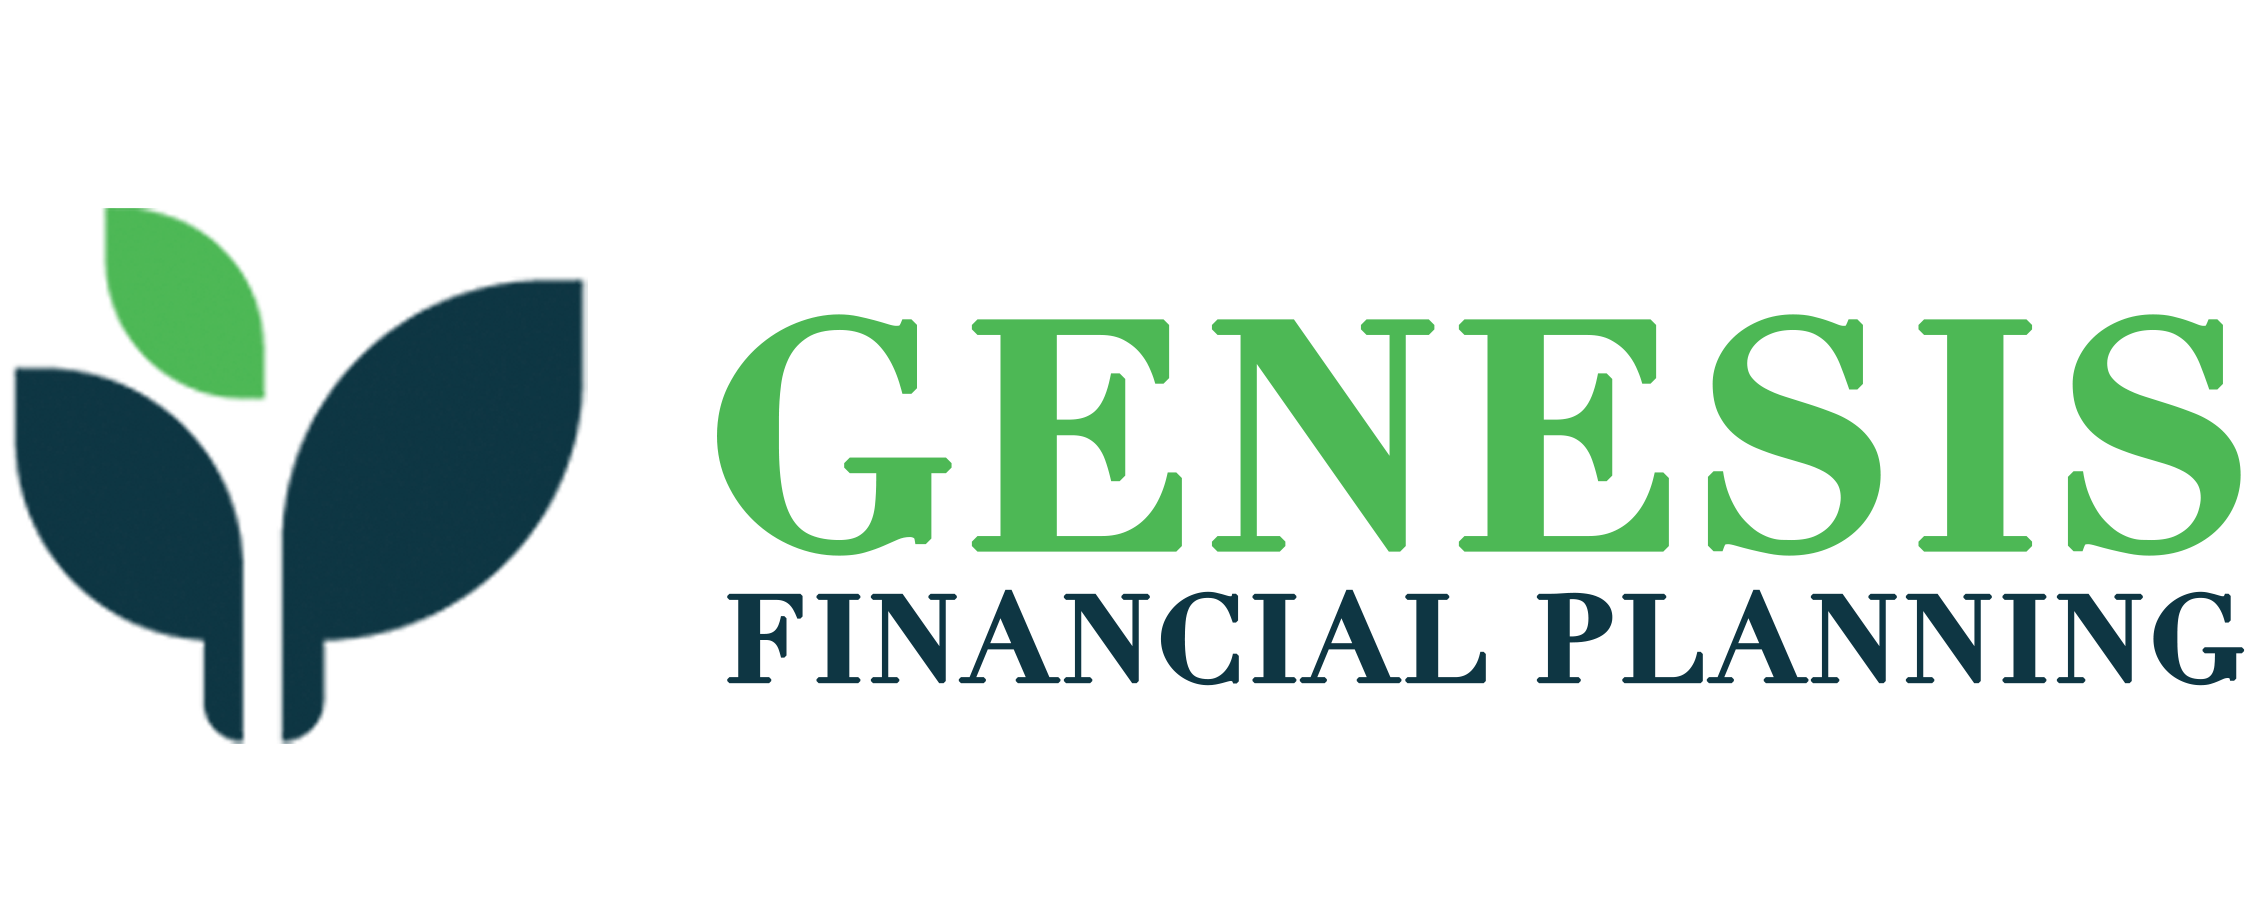 Genesis Financial Planning